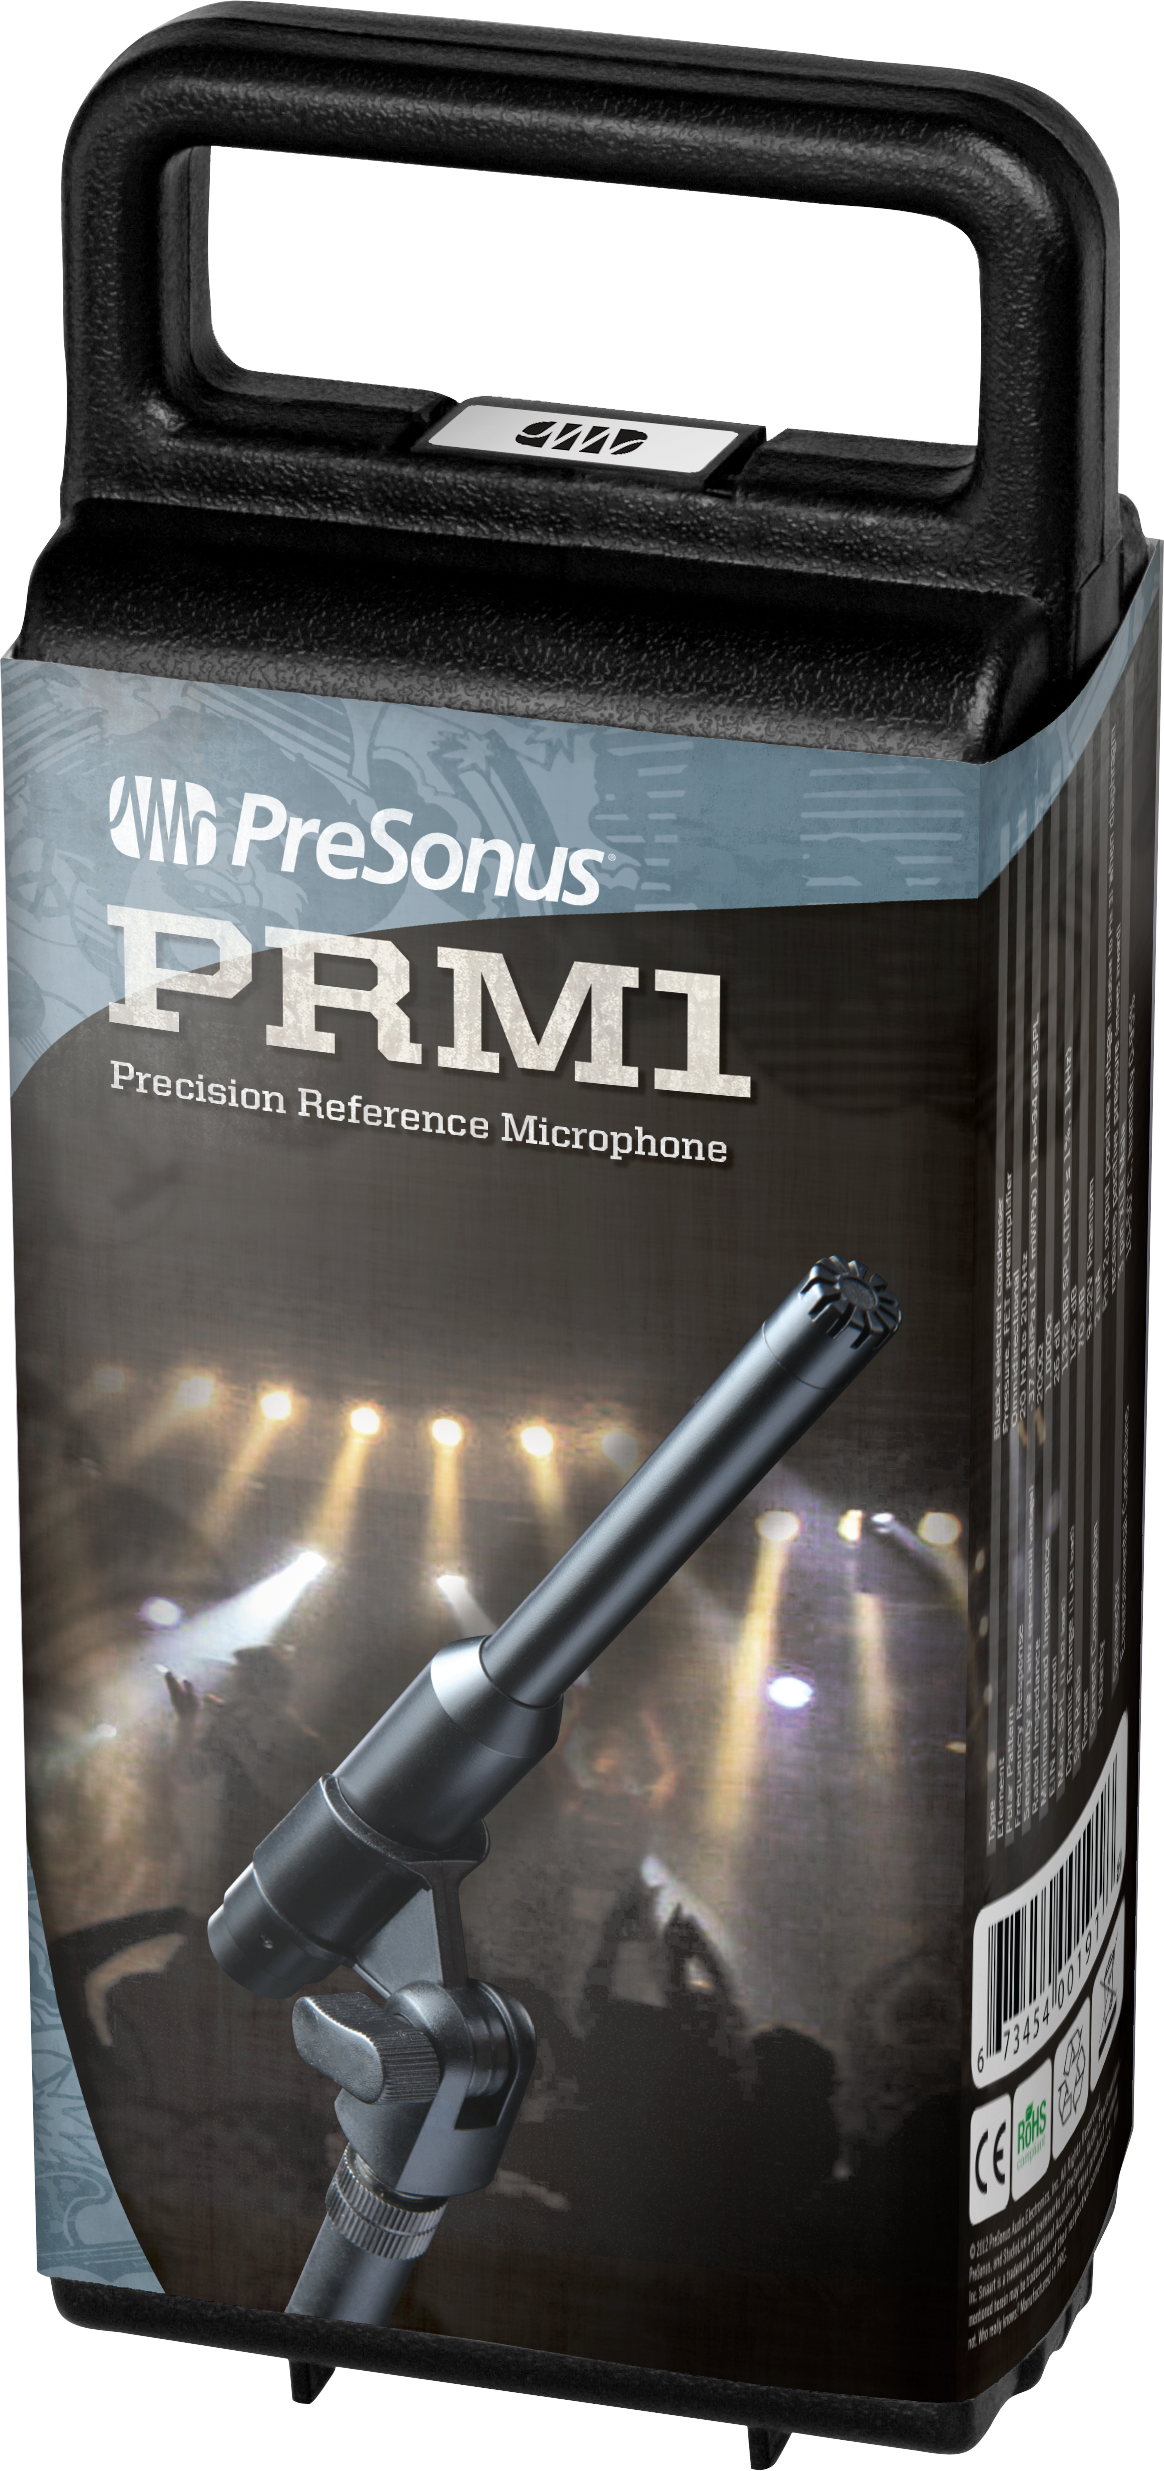 PreSonus® PRM1 Precision Reference Microphone, Black 2777300105